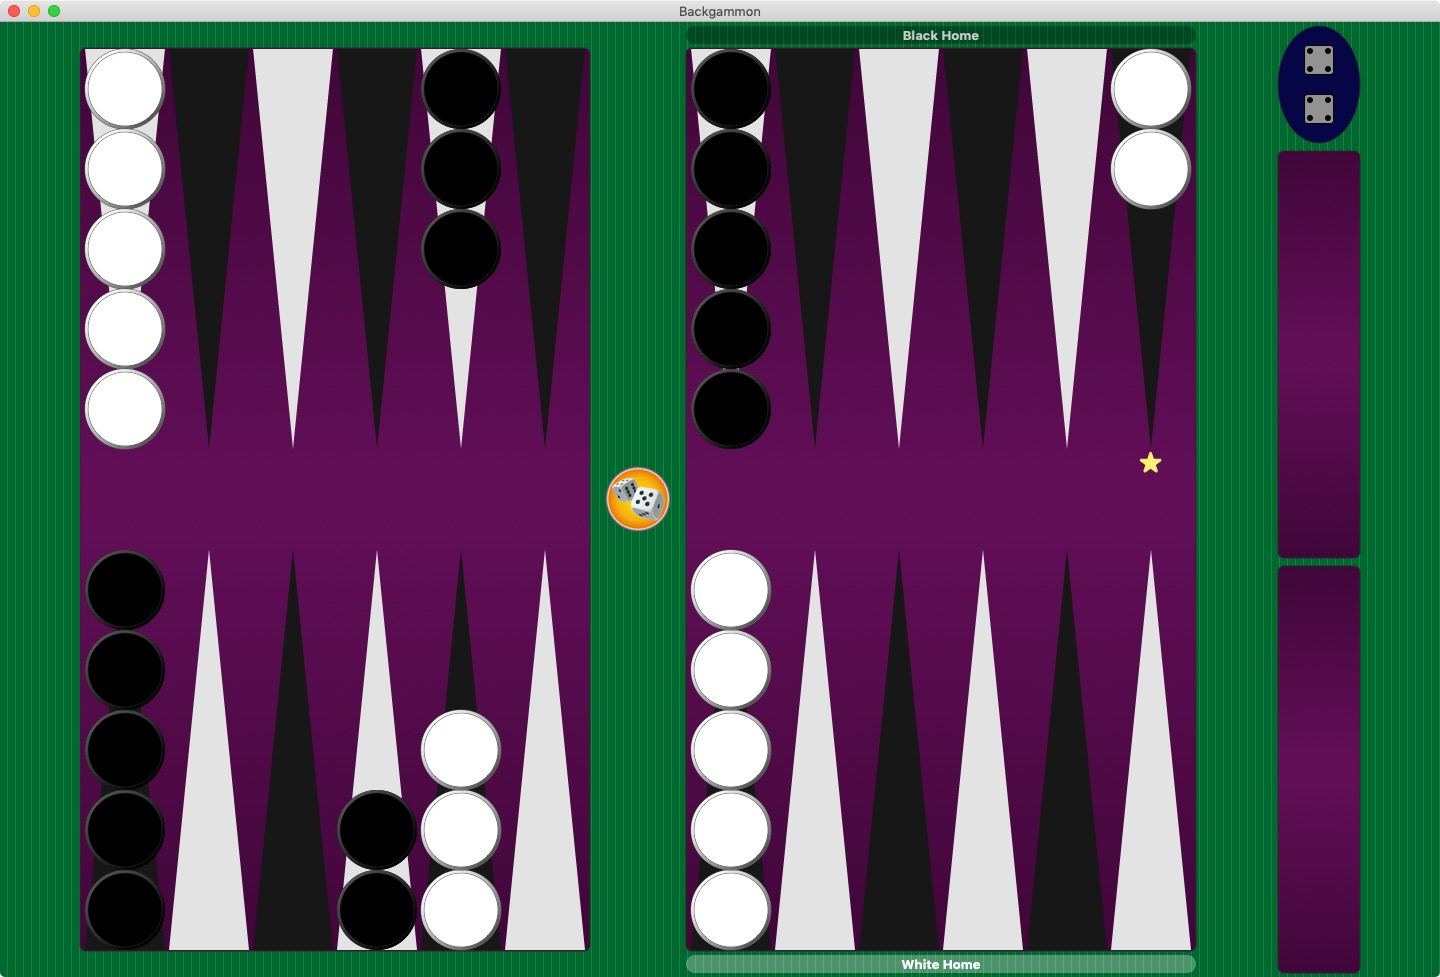 Growly Backgammon 2.1 : Gameplay